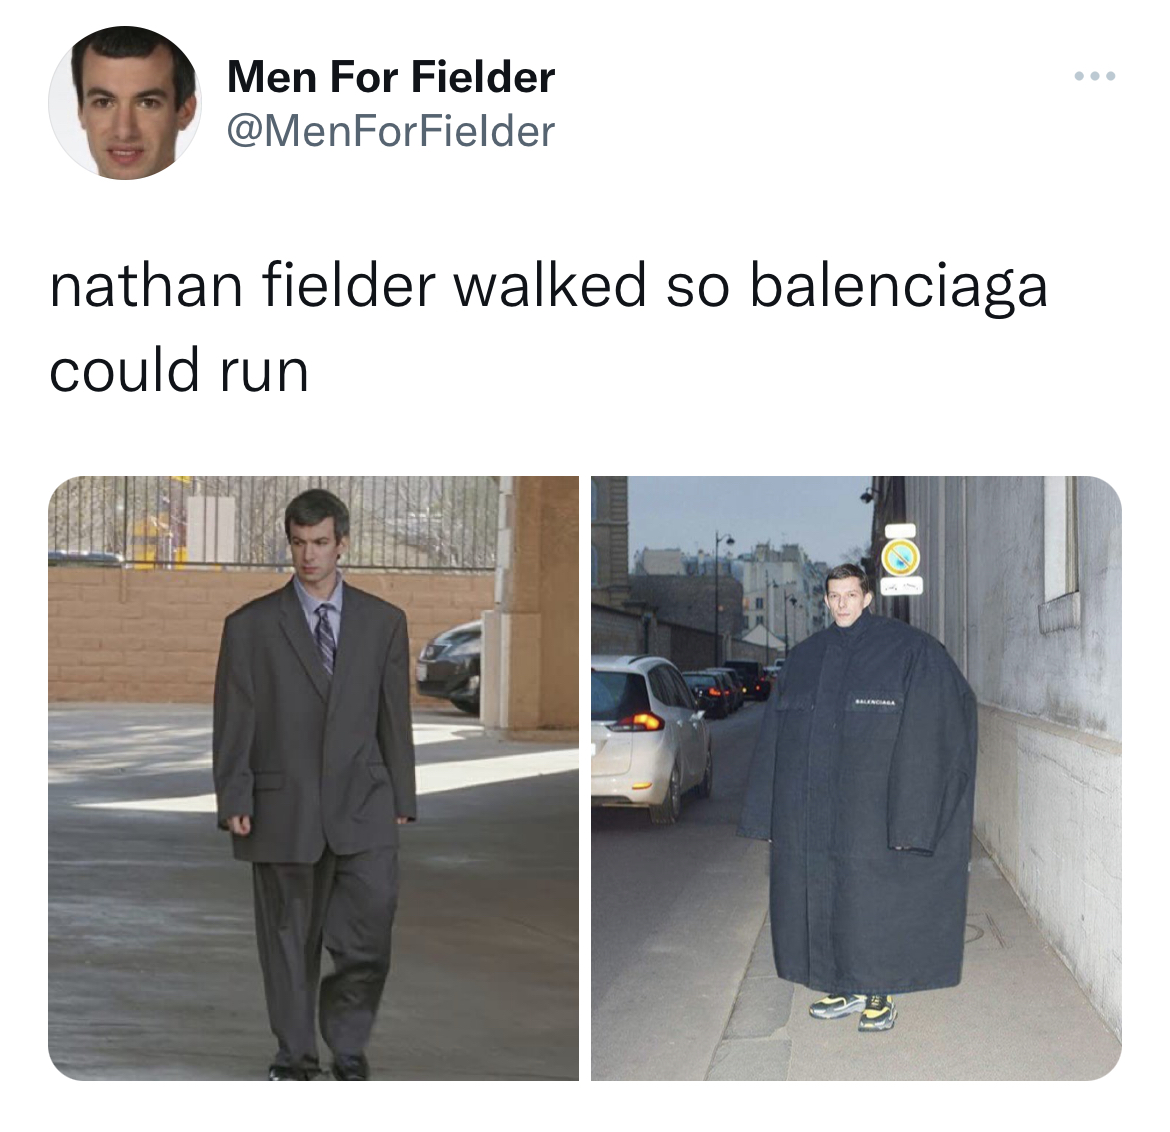 presentation - Men For Fielder nathan fielder walked so balenciaga could run Ke